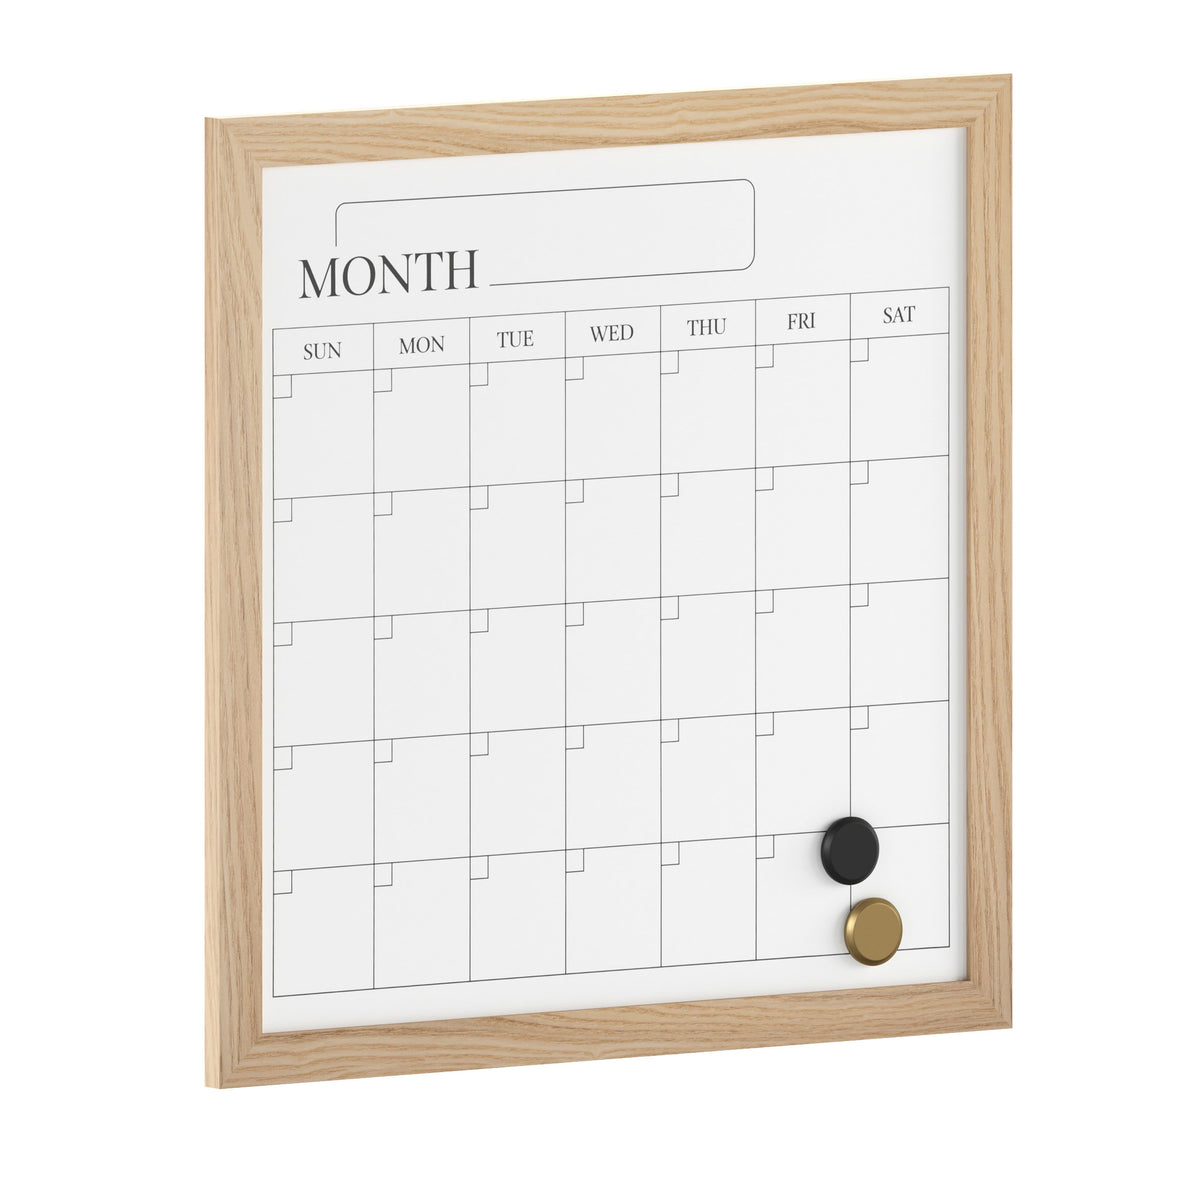 Light Natural Woodgrain |#| Dry Erase Magnetic Monthly Calendar - Light Natural Woodgrain Frame - 18" x 18"